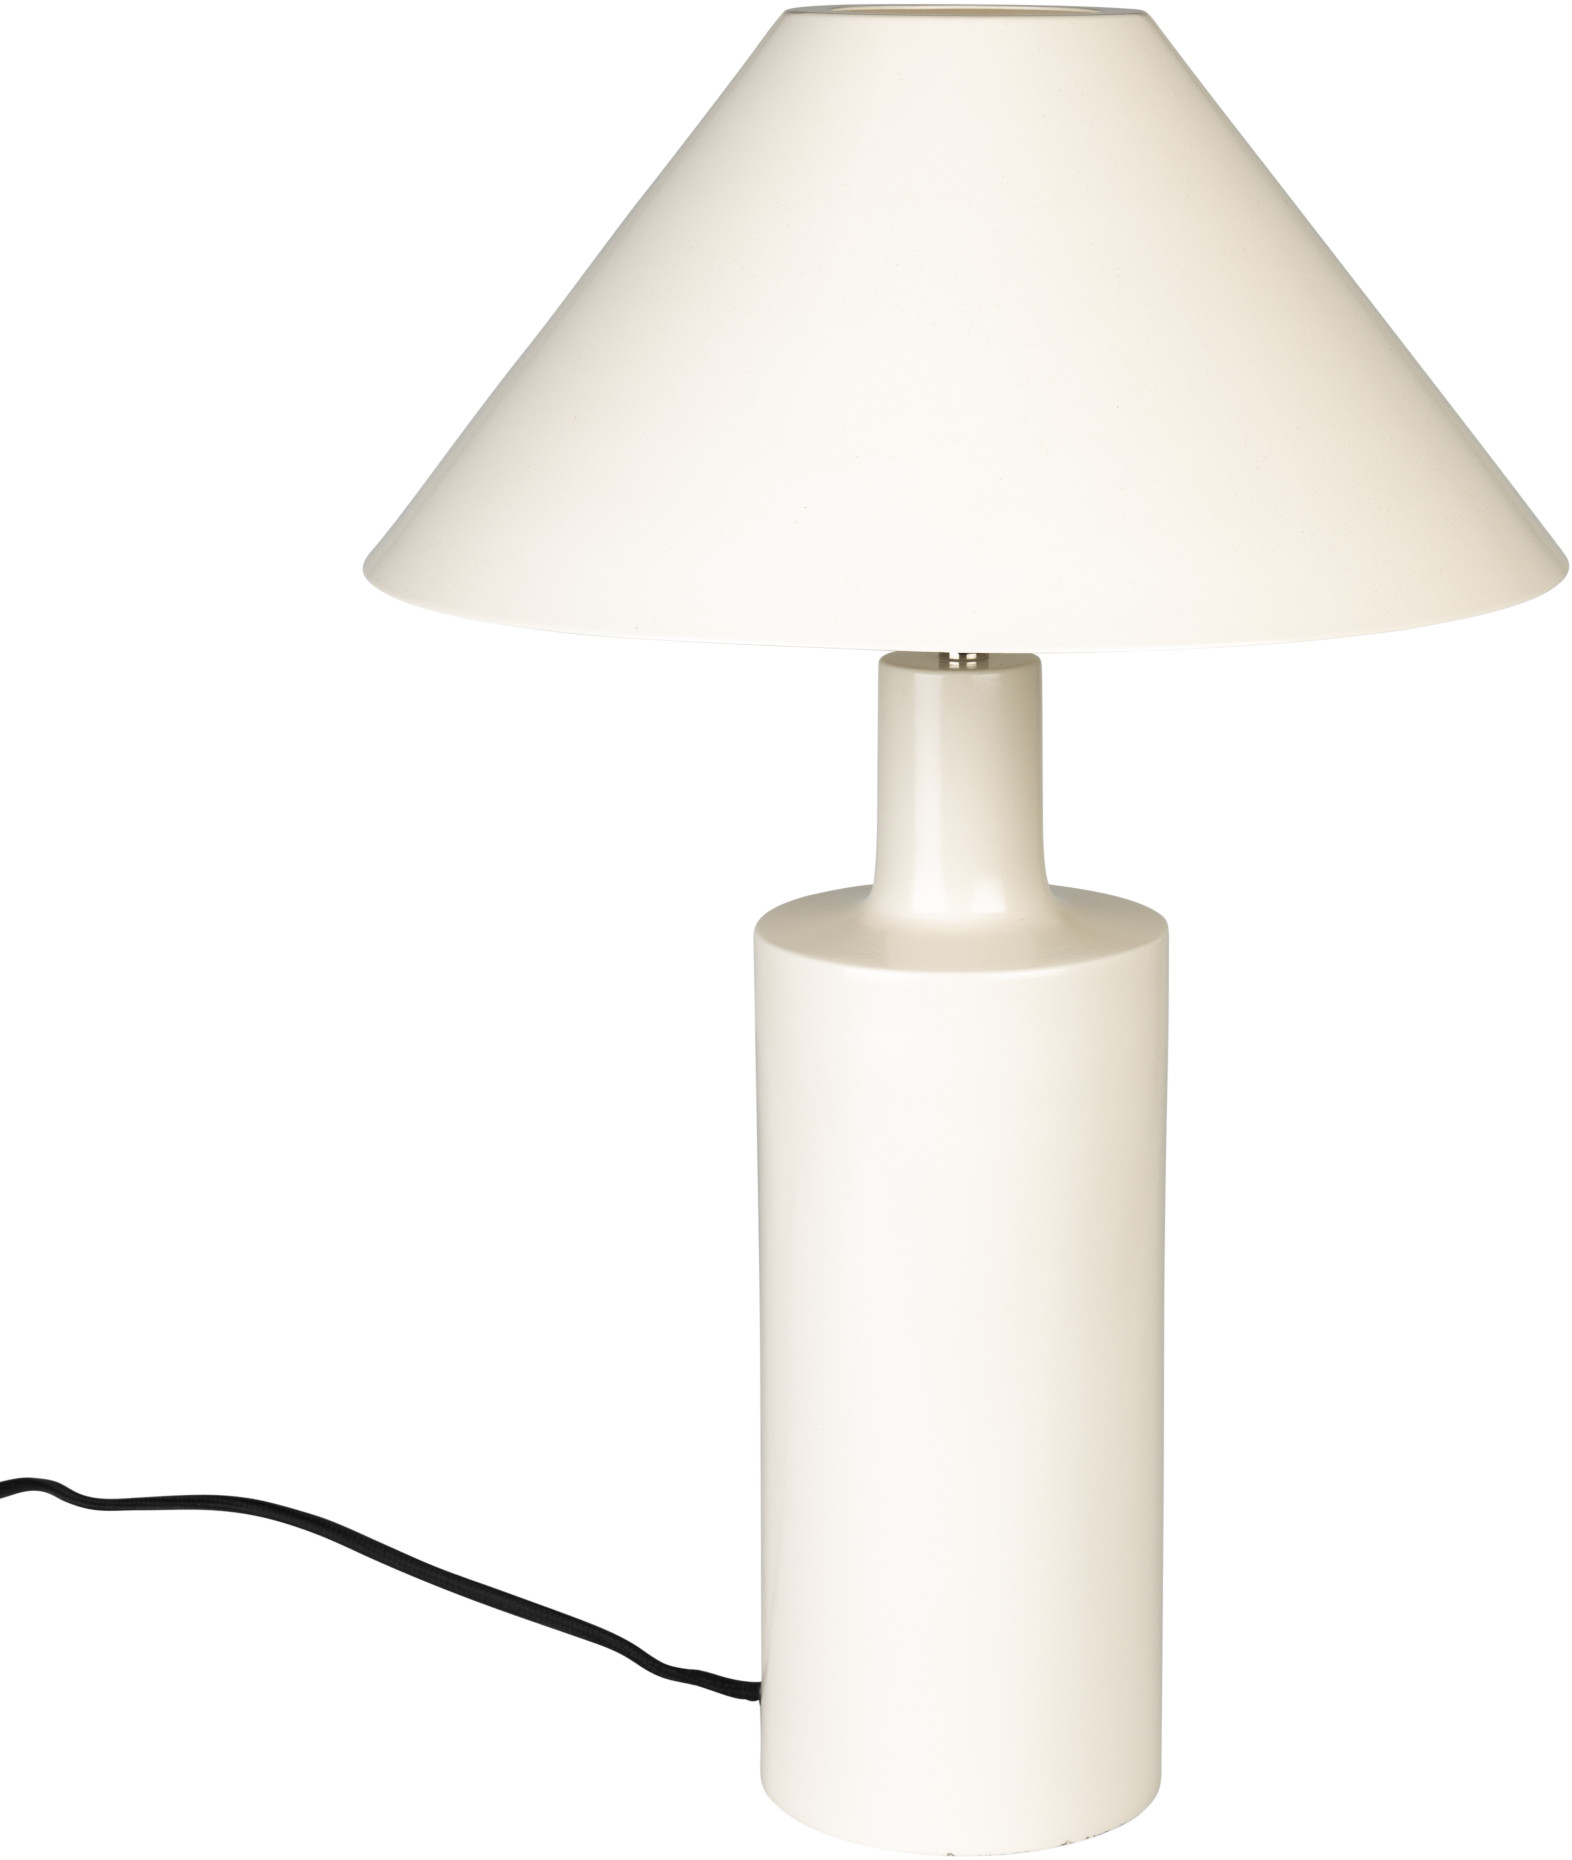 Tafellamp Wonders Shiny Beige Zuiver Tafellamp ZVR5200163